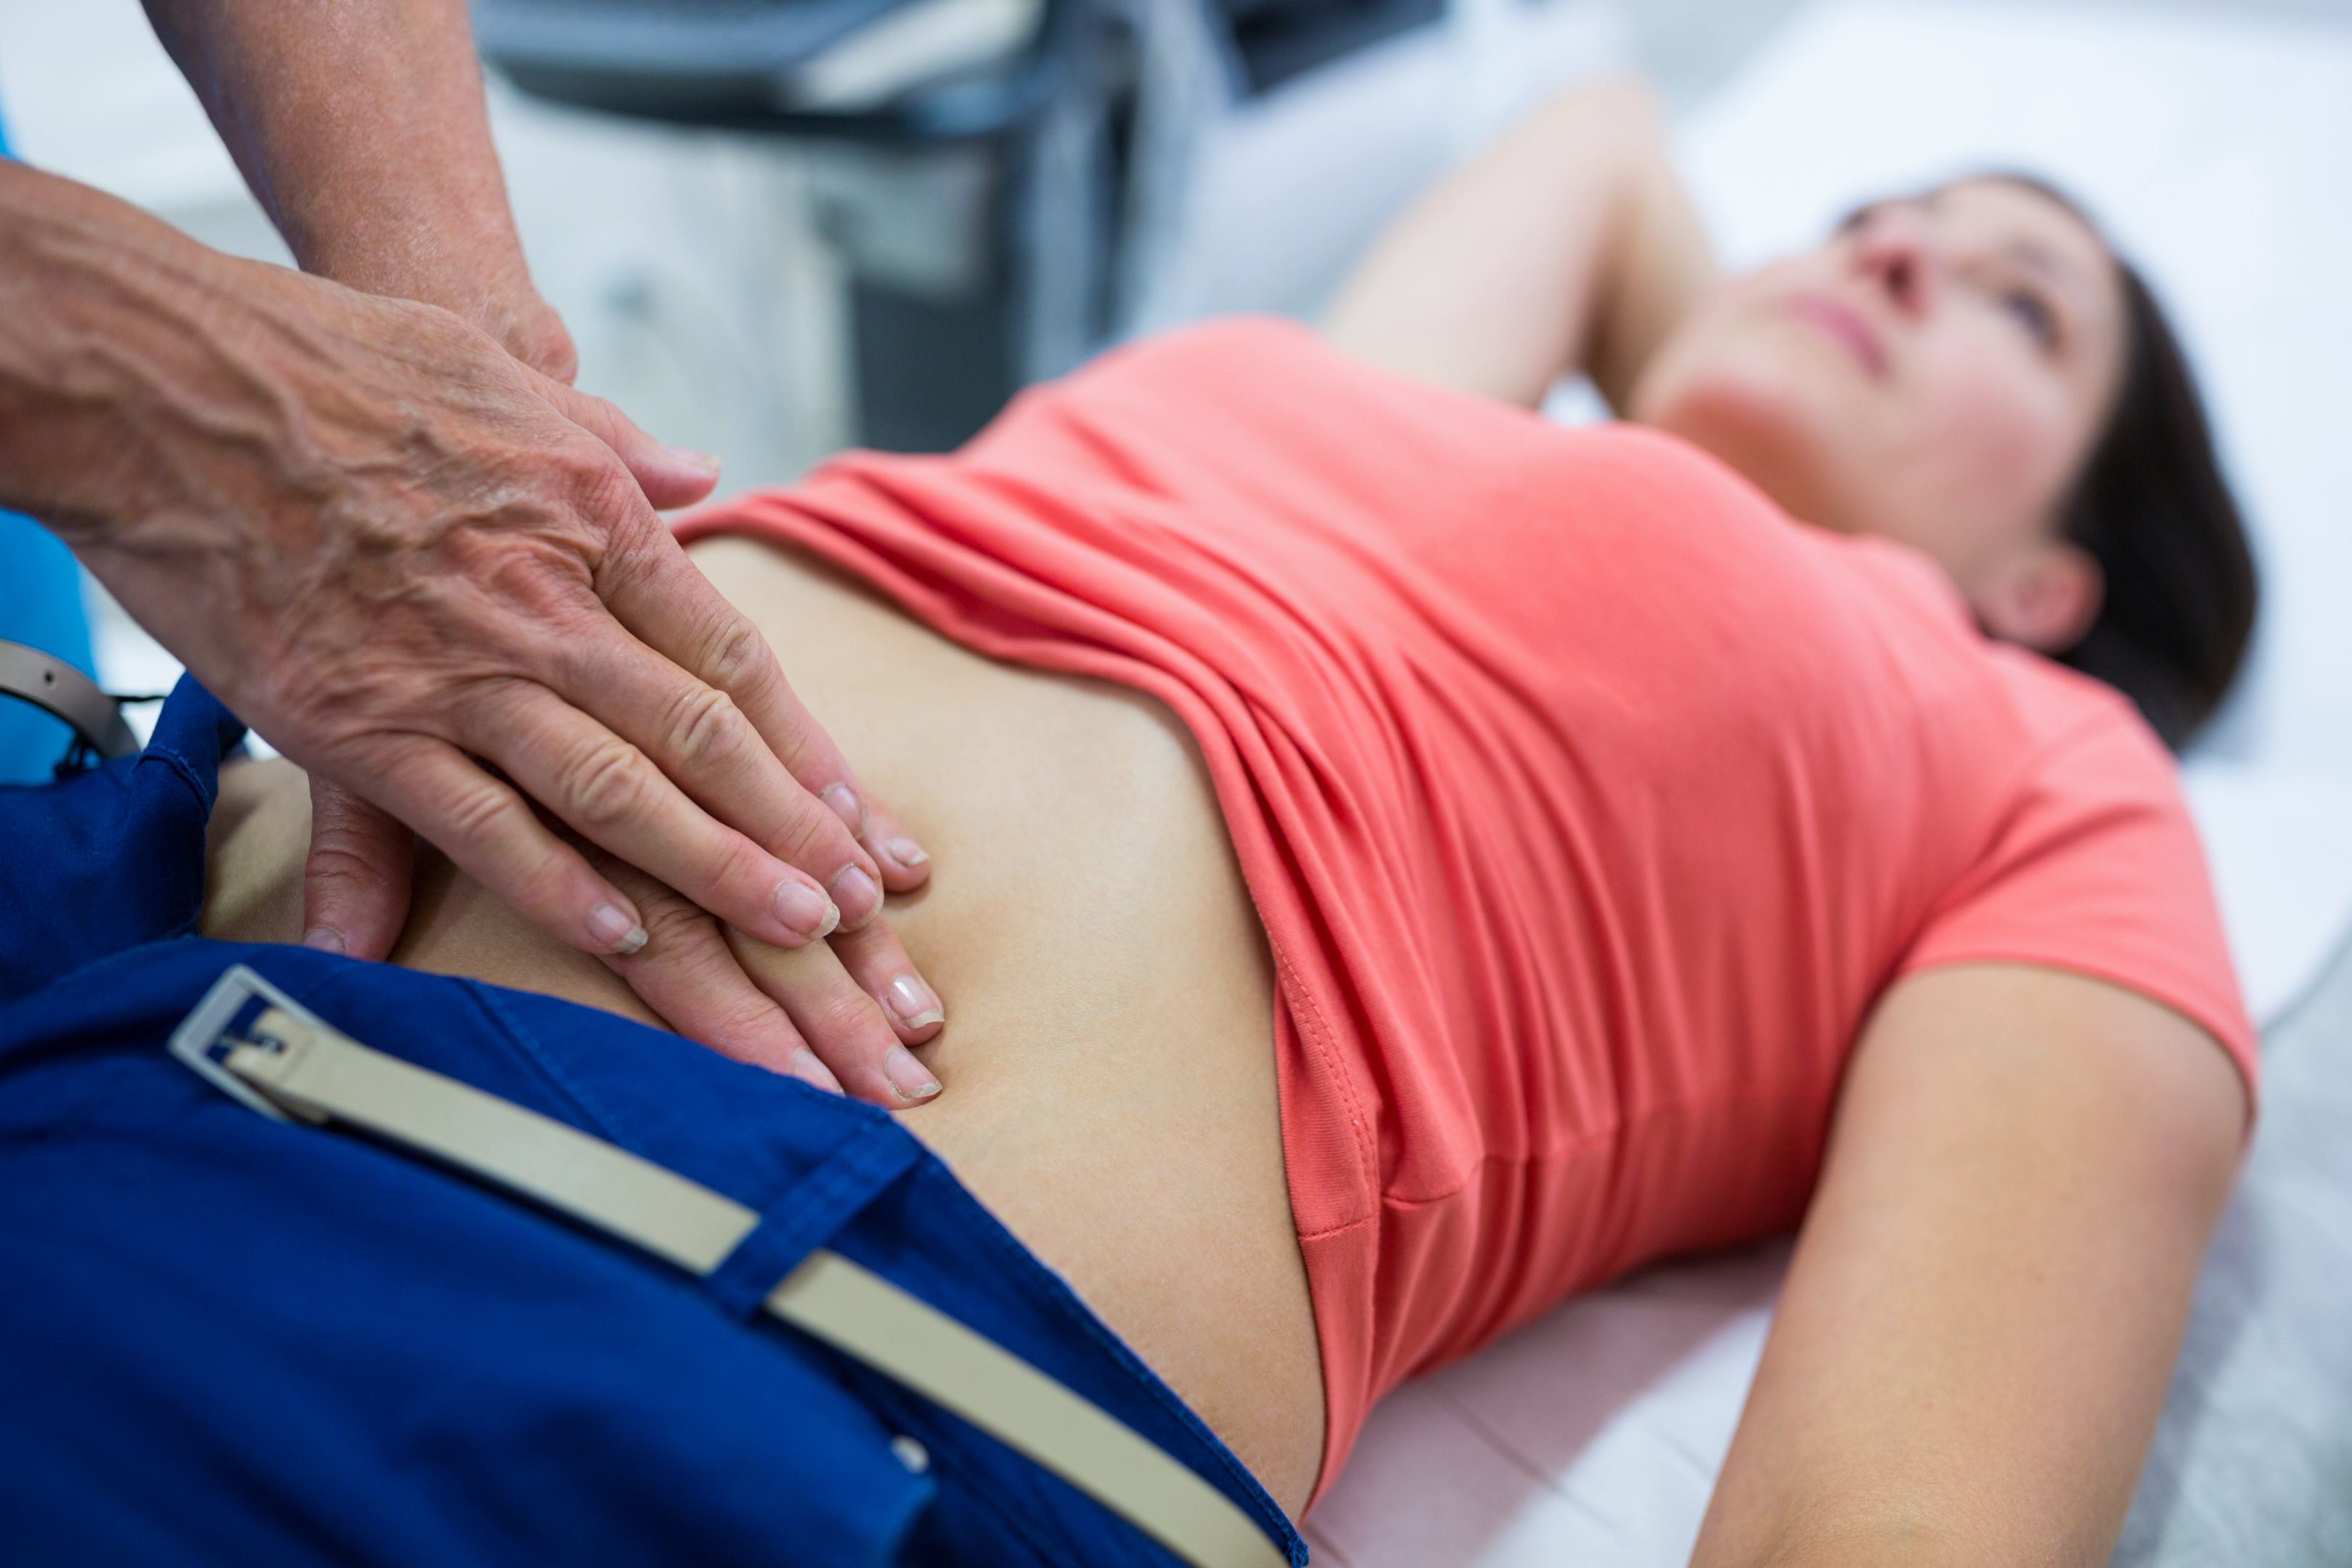 pelvic ultrasound examination